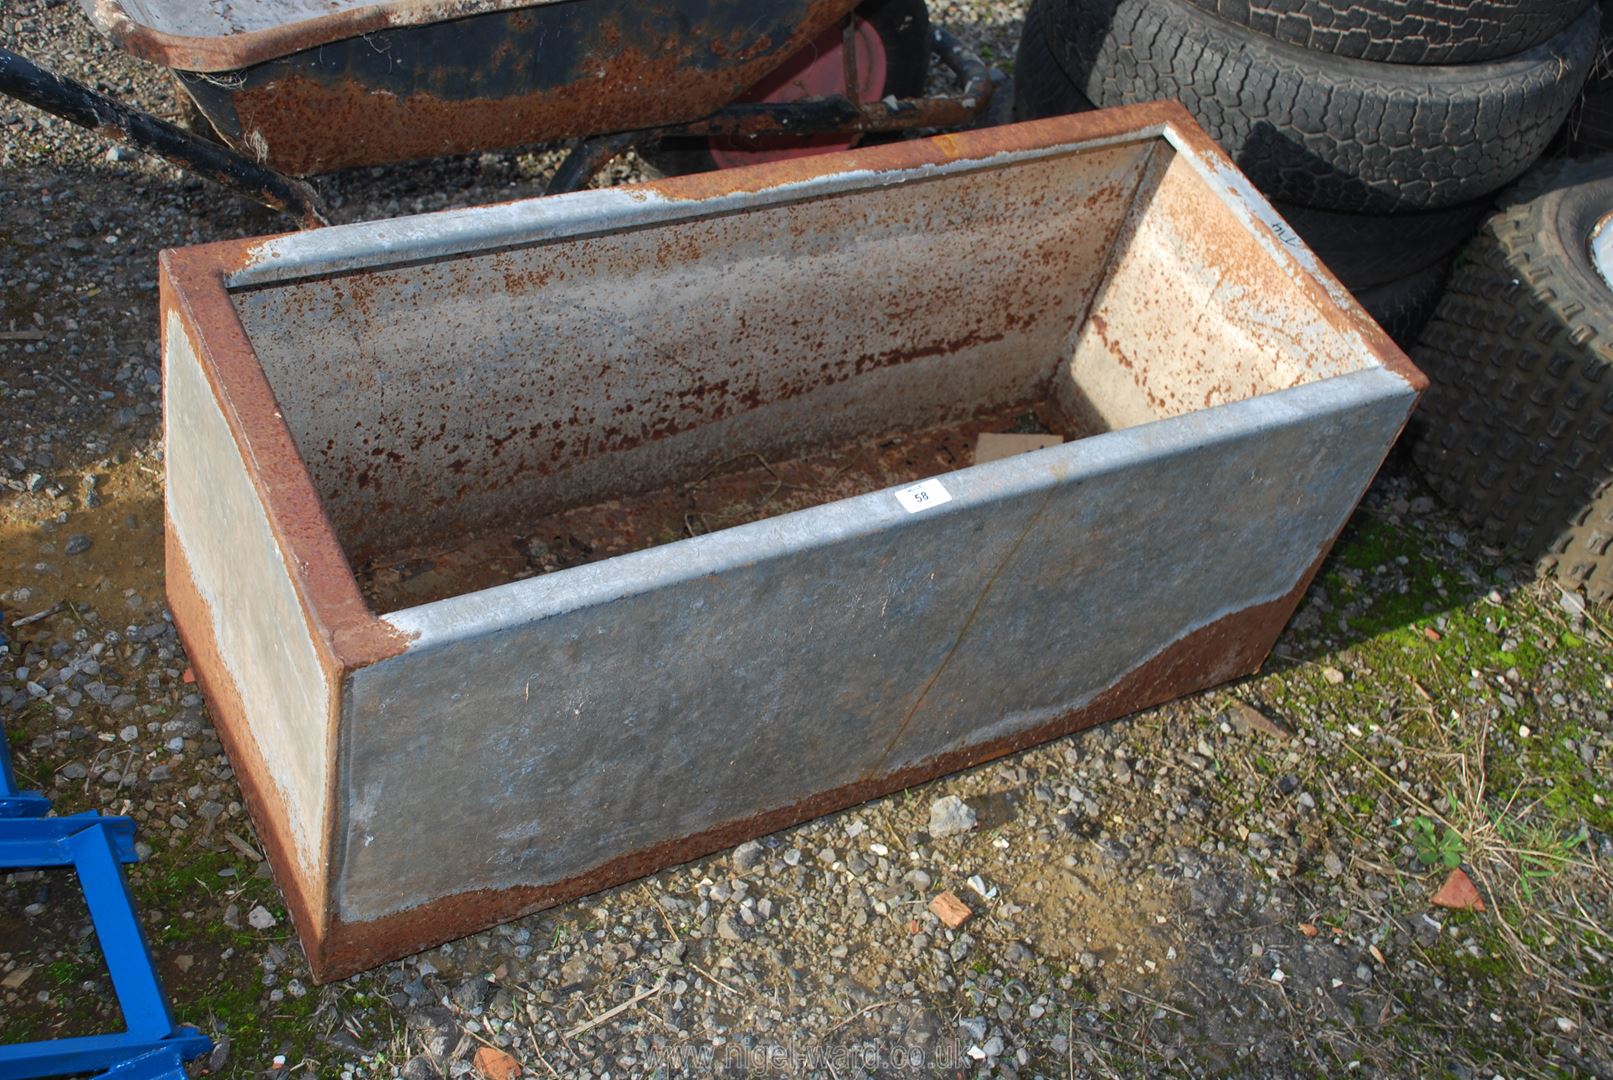 Galvanised metal water tank (bottom a/f.) 36" x 15" x 15".